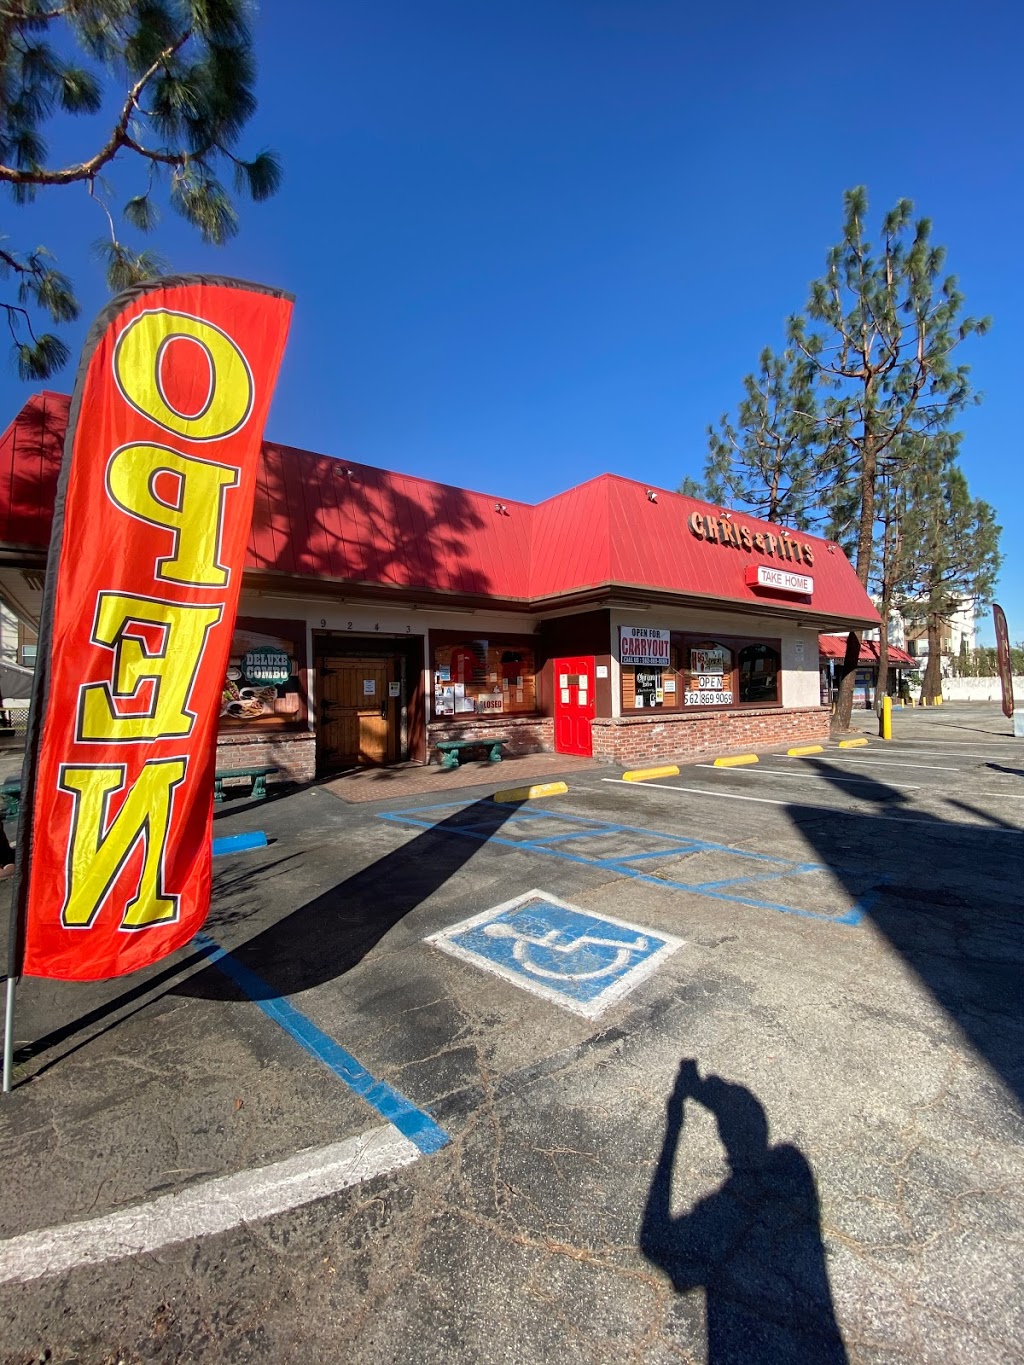 Chris & Pitts BBQ Restaurant | 9243 Lakewood Blvd, Downey, CA 90240, USA | Phone: (562) 869-9069